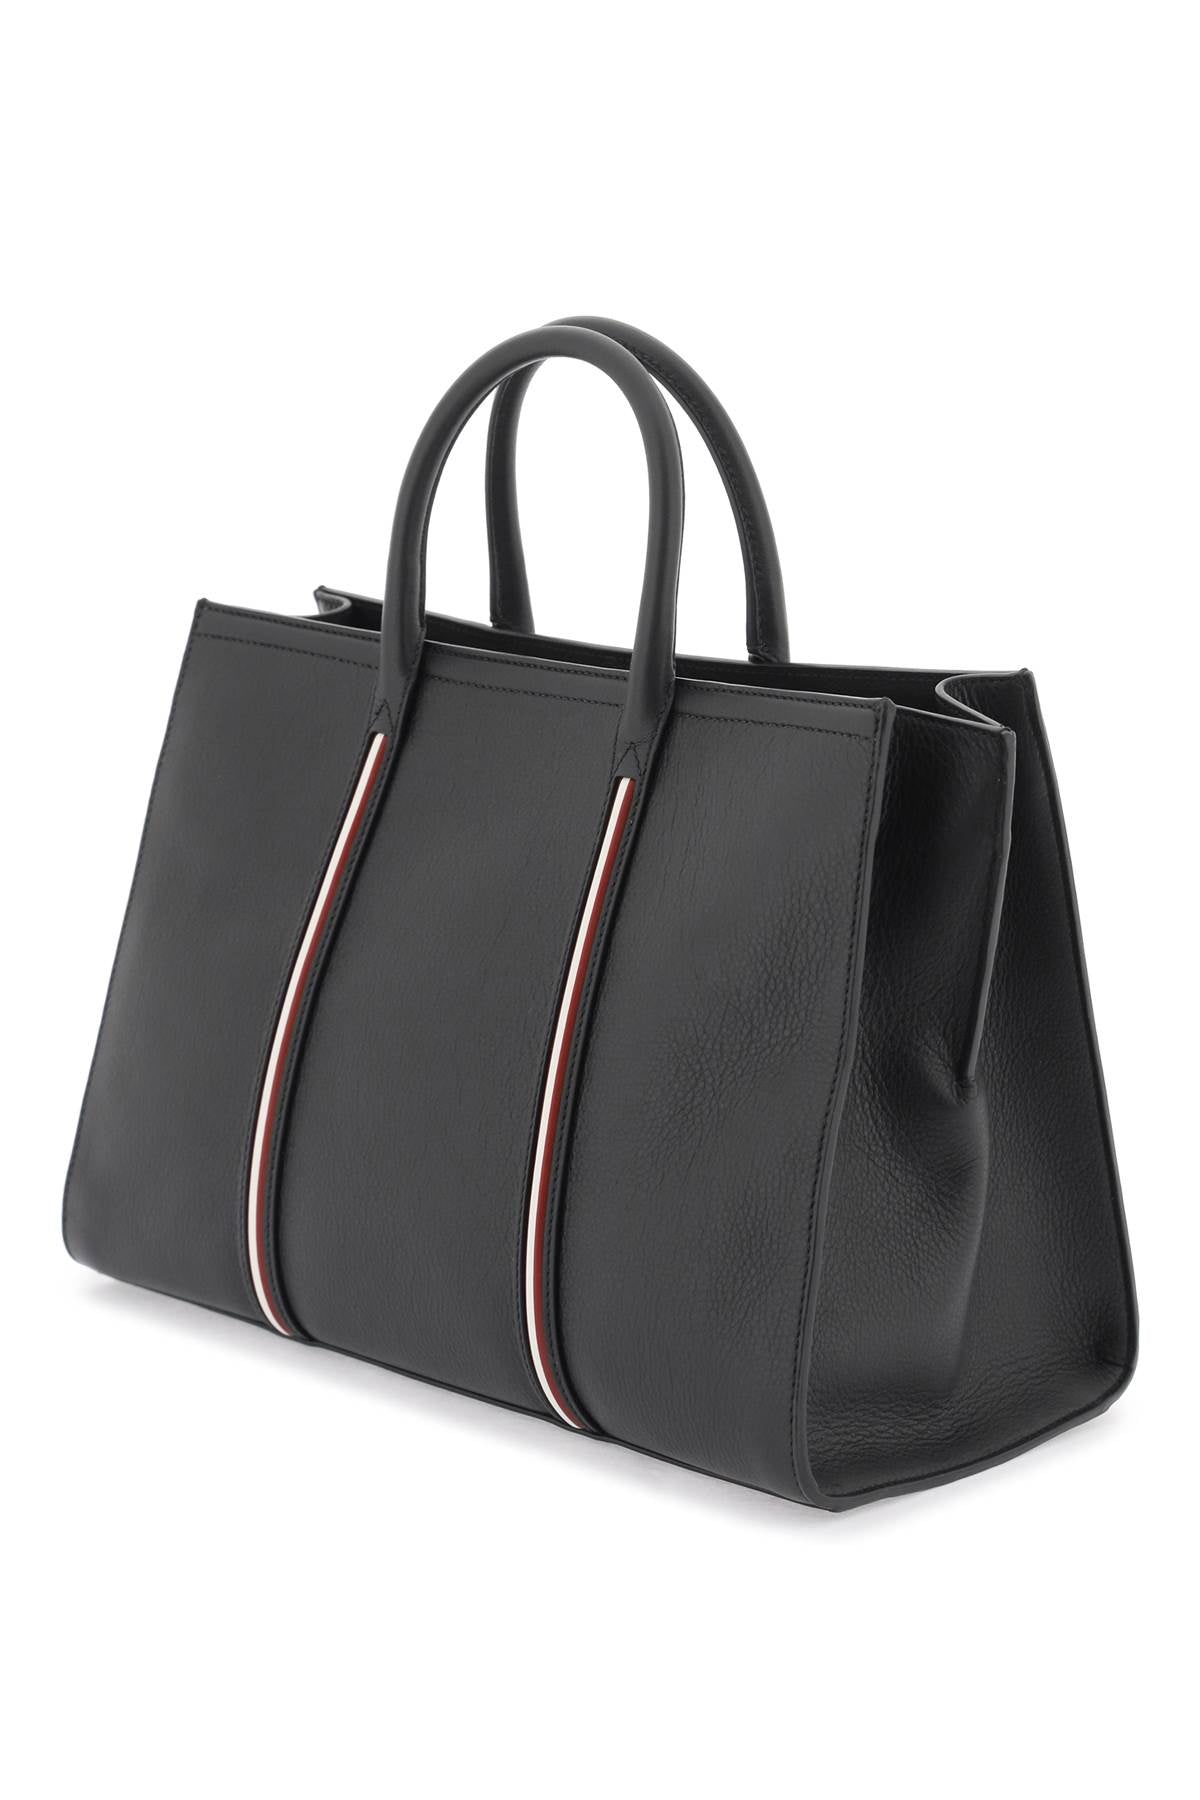 Nero Luxurious Tote Handbag for the Fashion-Forward Woman